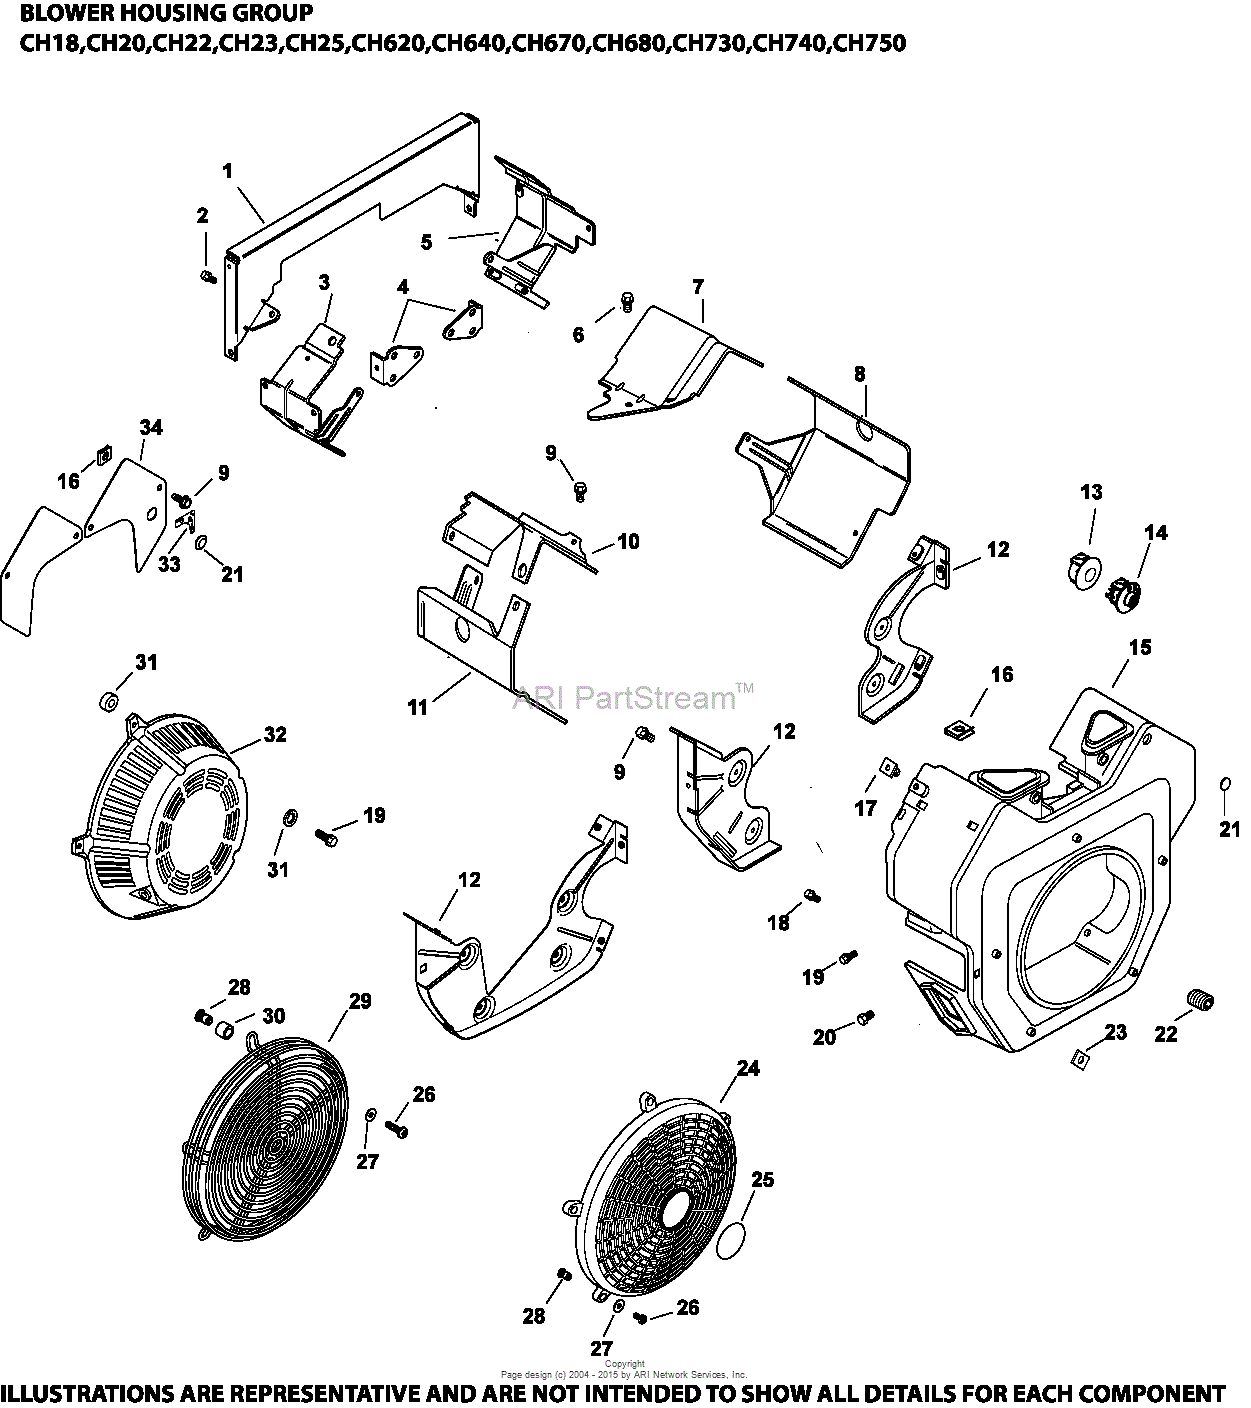 Kohler CH730-3308 GARDNER 23.5 HP (17.5 kW) Parts Diagram for Blower